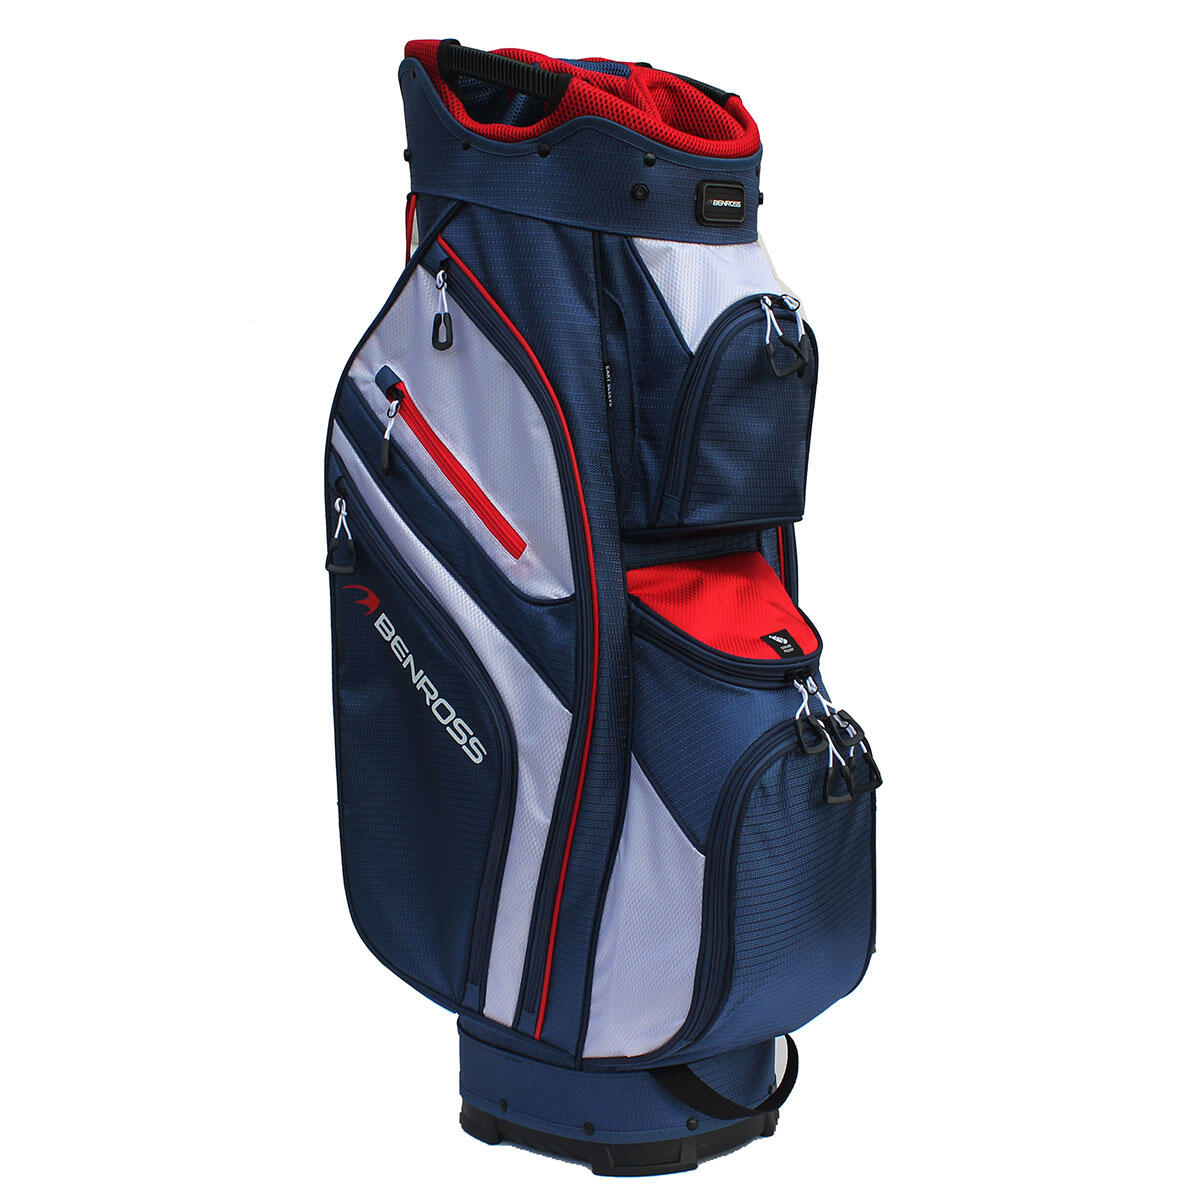 Benross PROTEC 2.0 Deluxe Golf Cart Bag 2/4